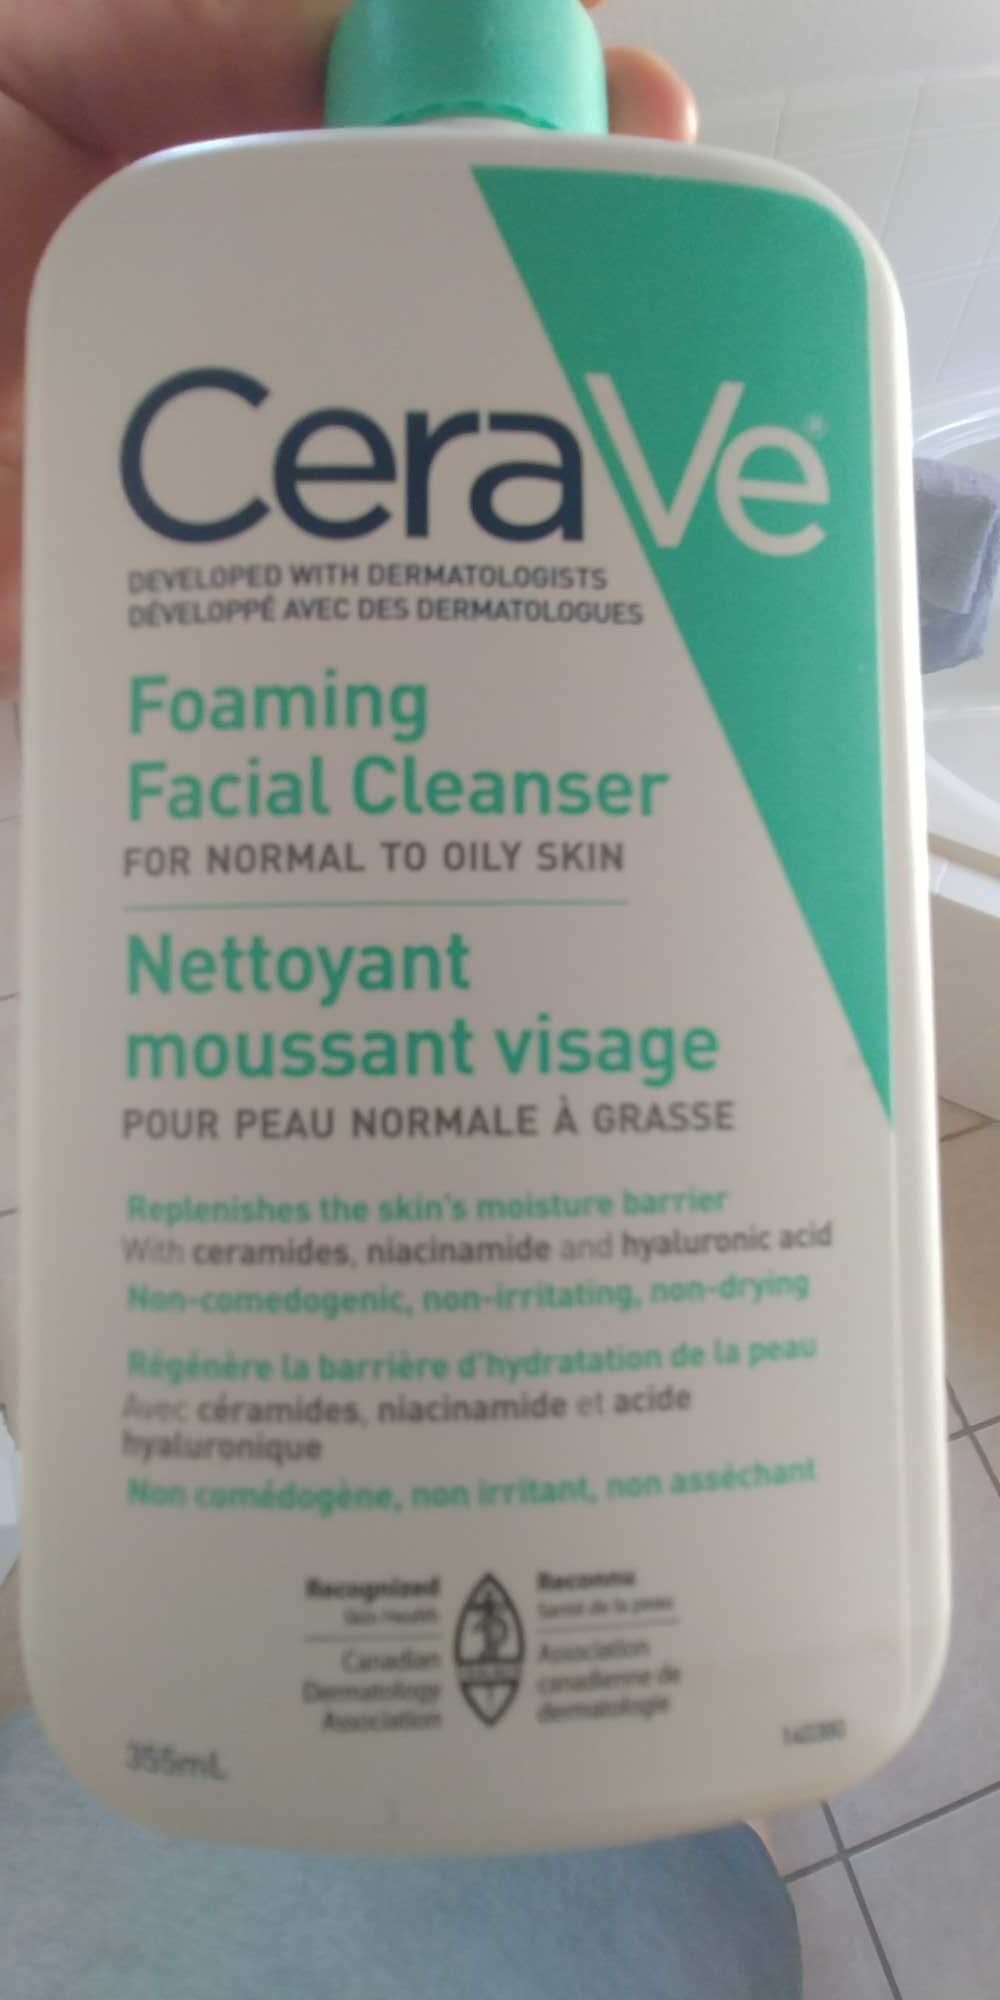 Foaming Facial Cleanser - Produkt - en